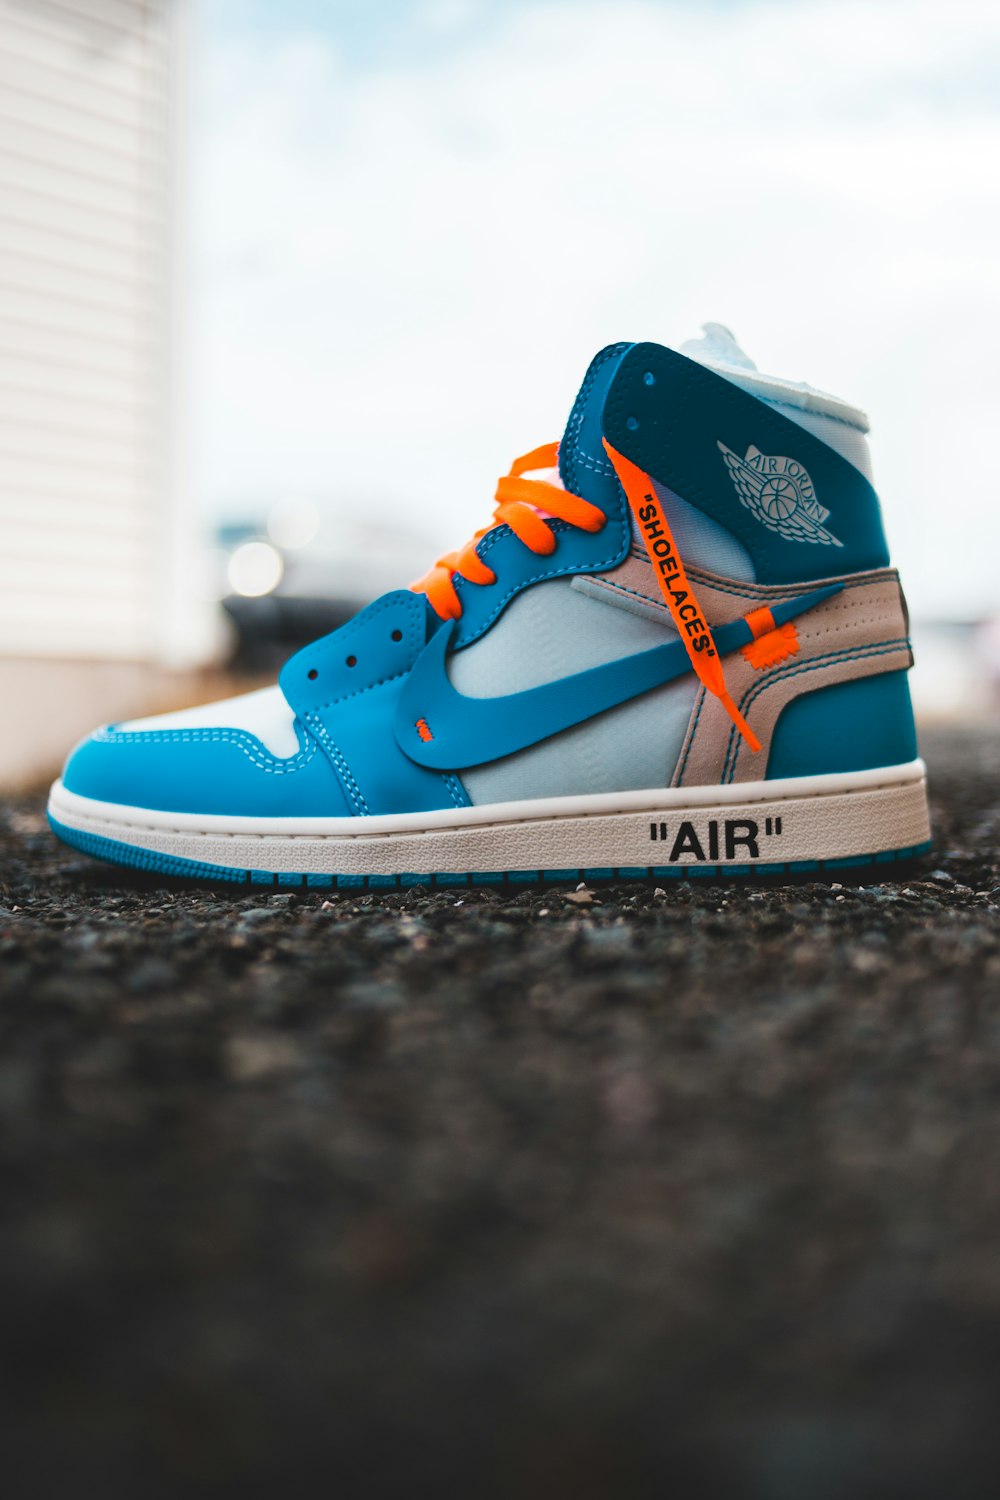 Blue and orange nike high top sneakers – Free Apparel Image on Unsplash